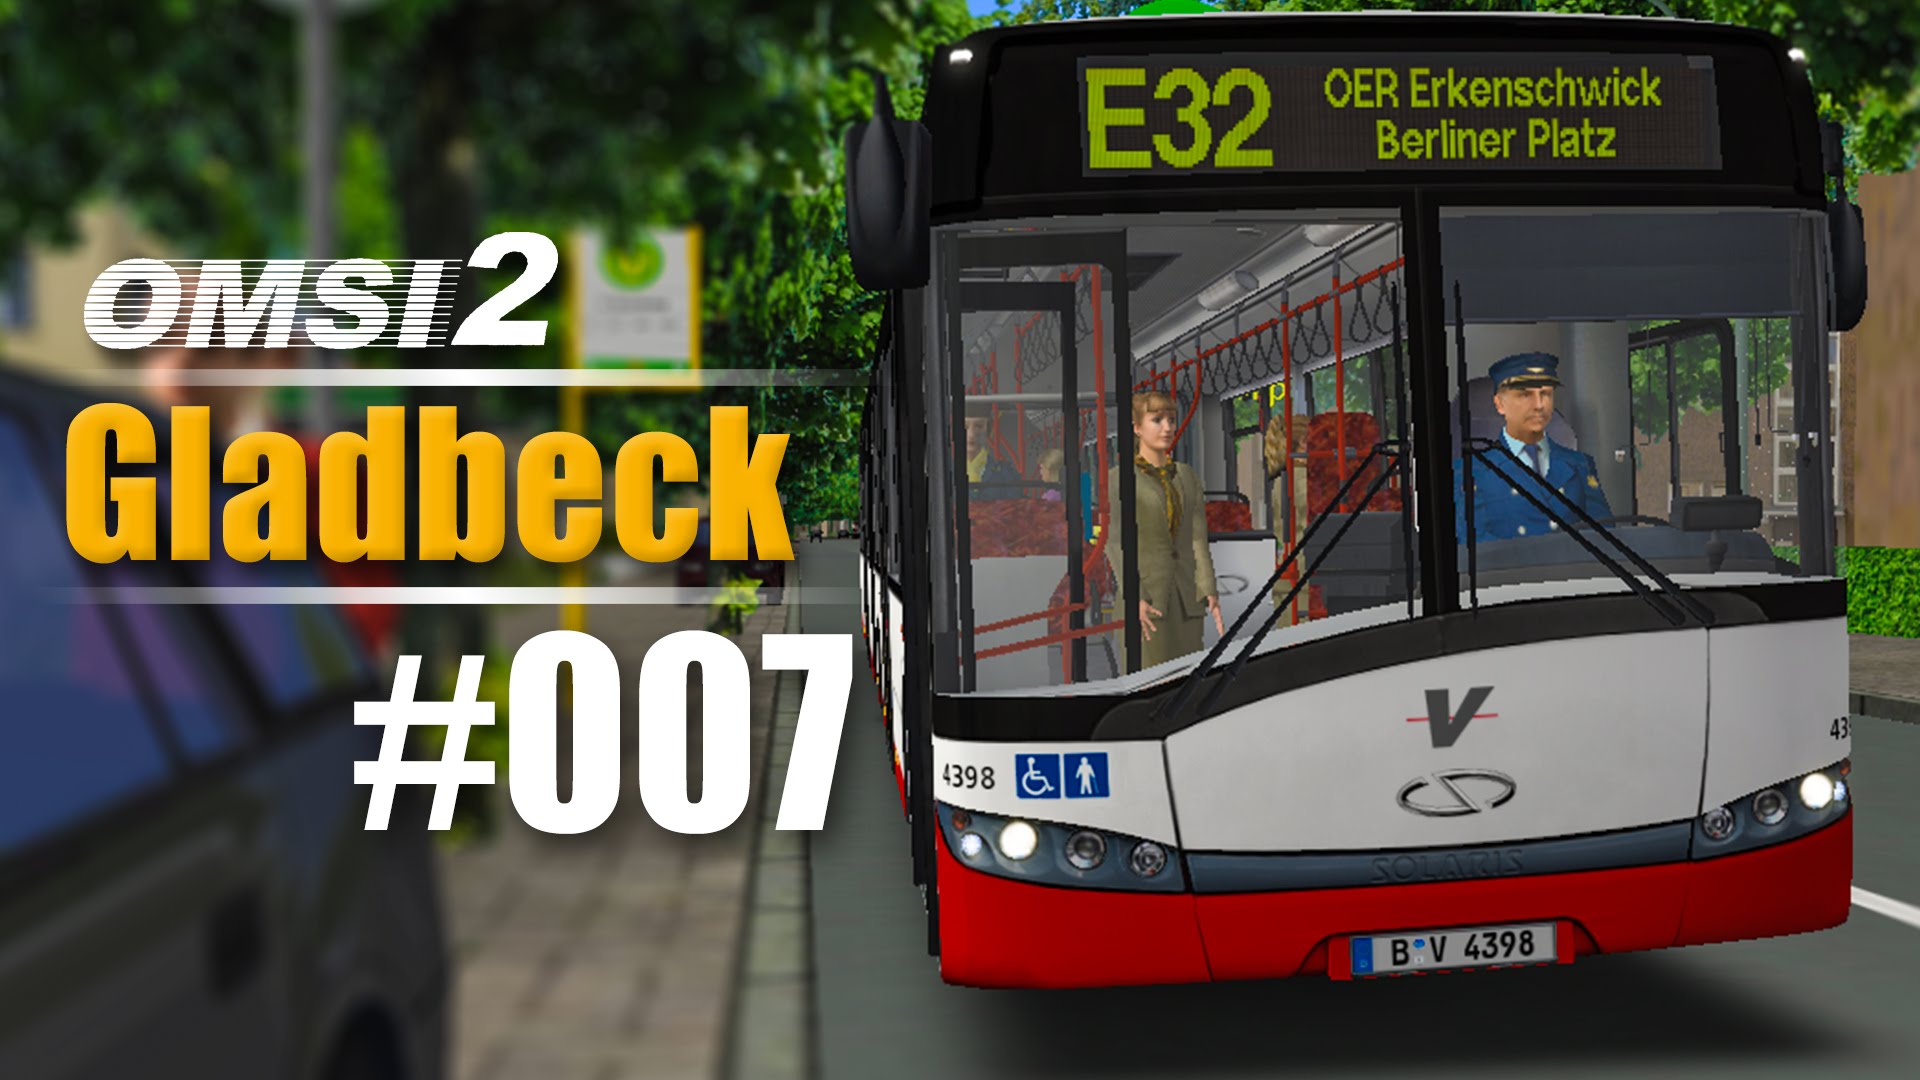 omsi 2 projekt gladbeck buses